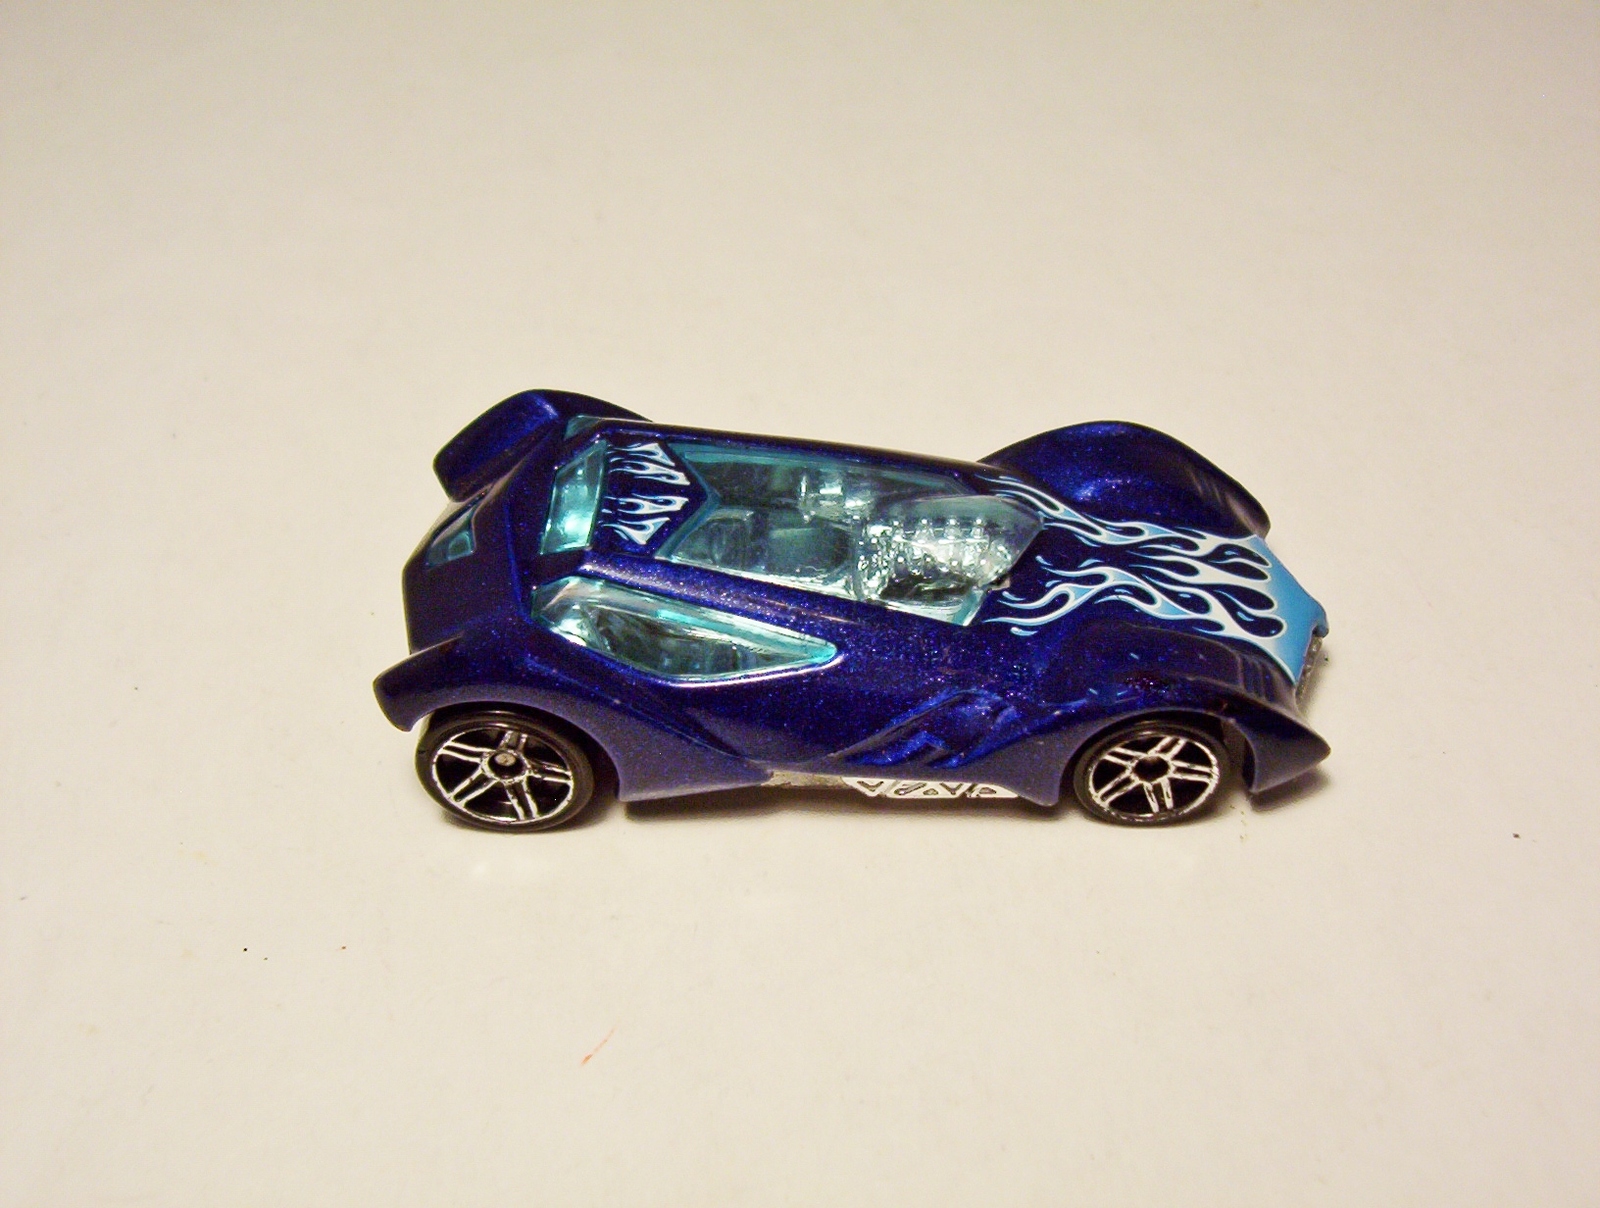 Hot Wheels Sinistra Metallic Blue Flame Car and 16 similar items